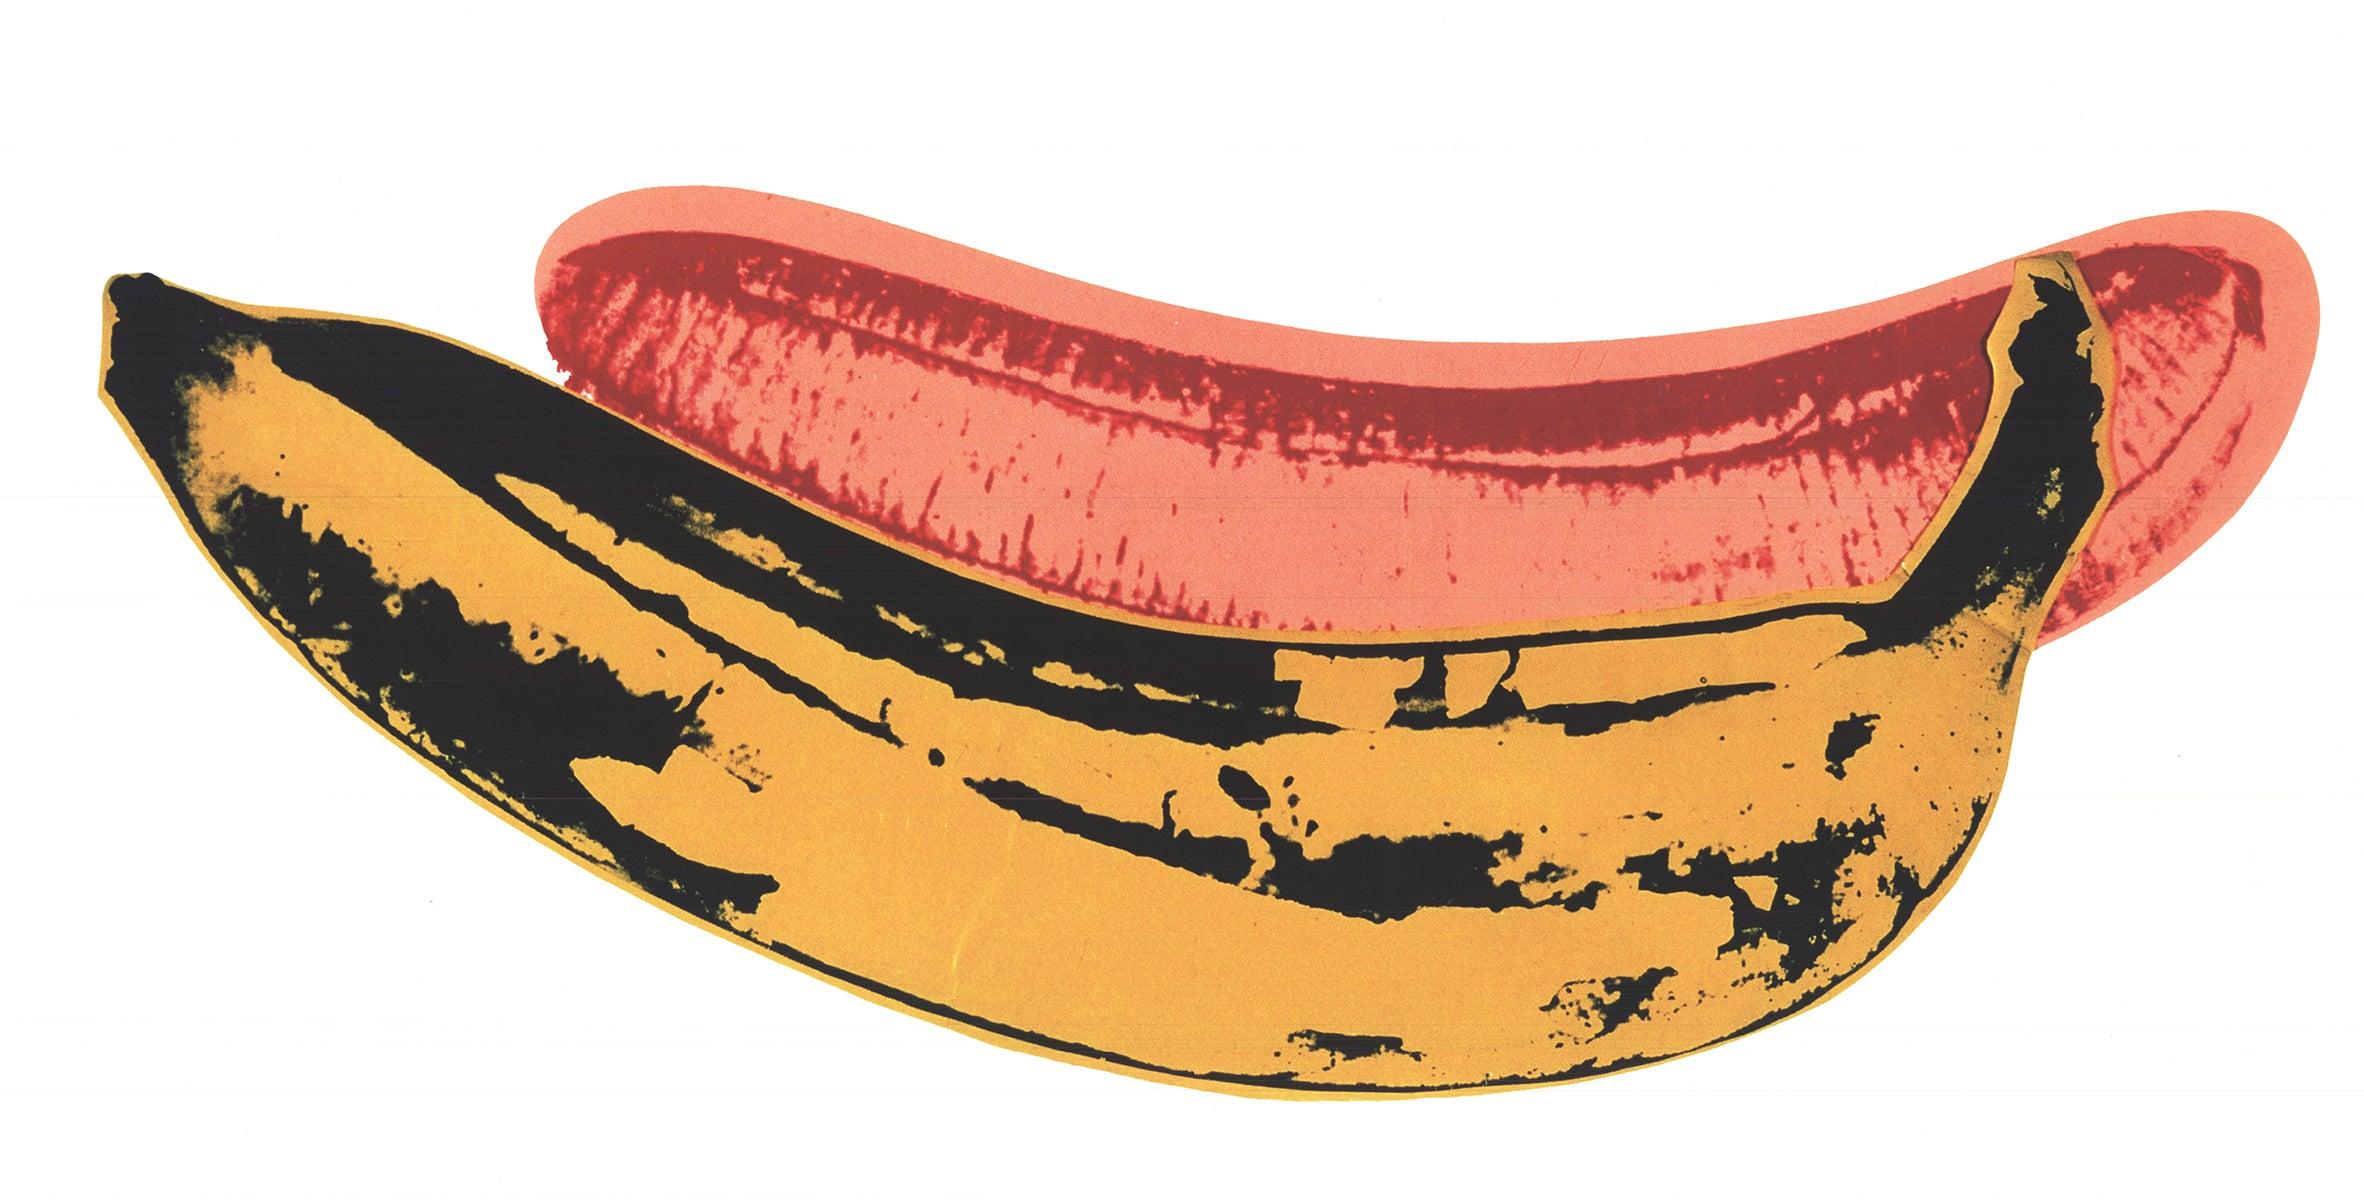 Andy Warhol 'Banana' 2010- Offset Lithograph For Sale 1